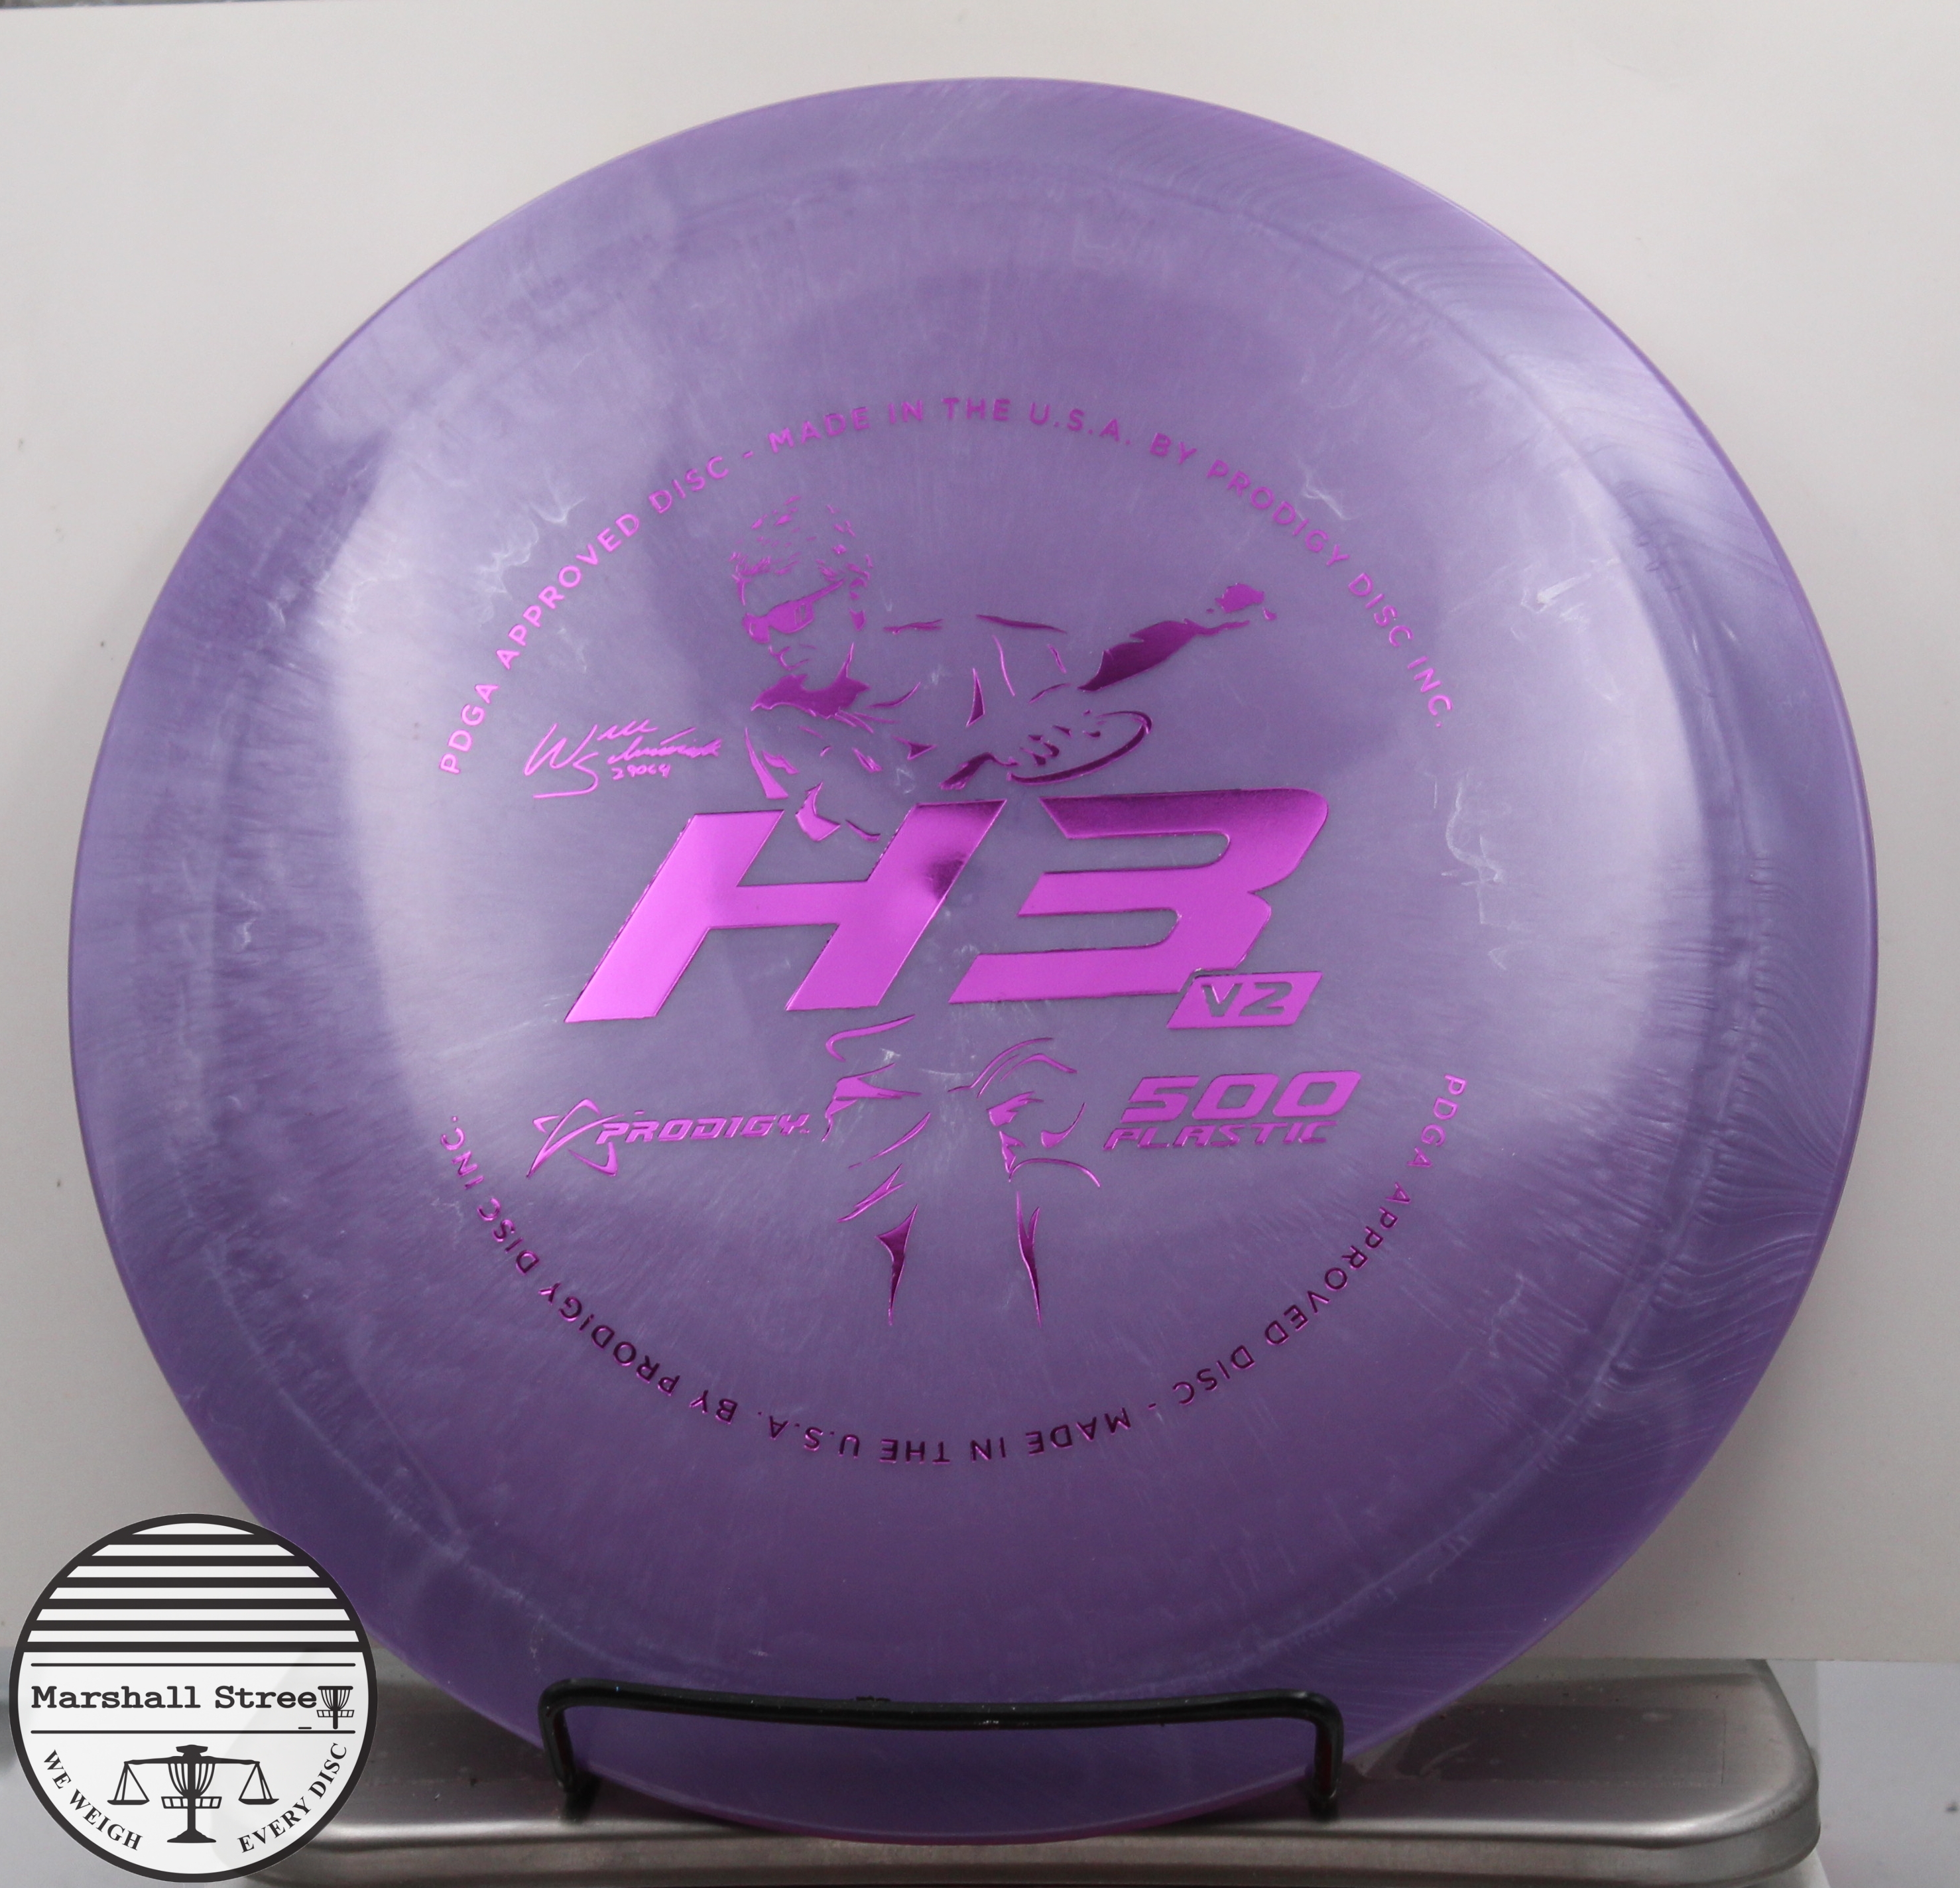 Prodigy H3 V2, 500 Will S. • Marshall Street Disc Golf